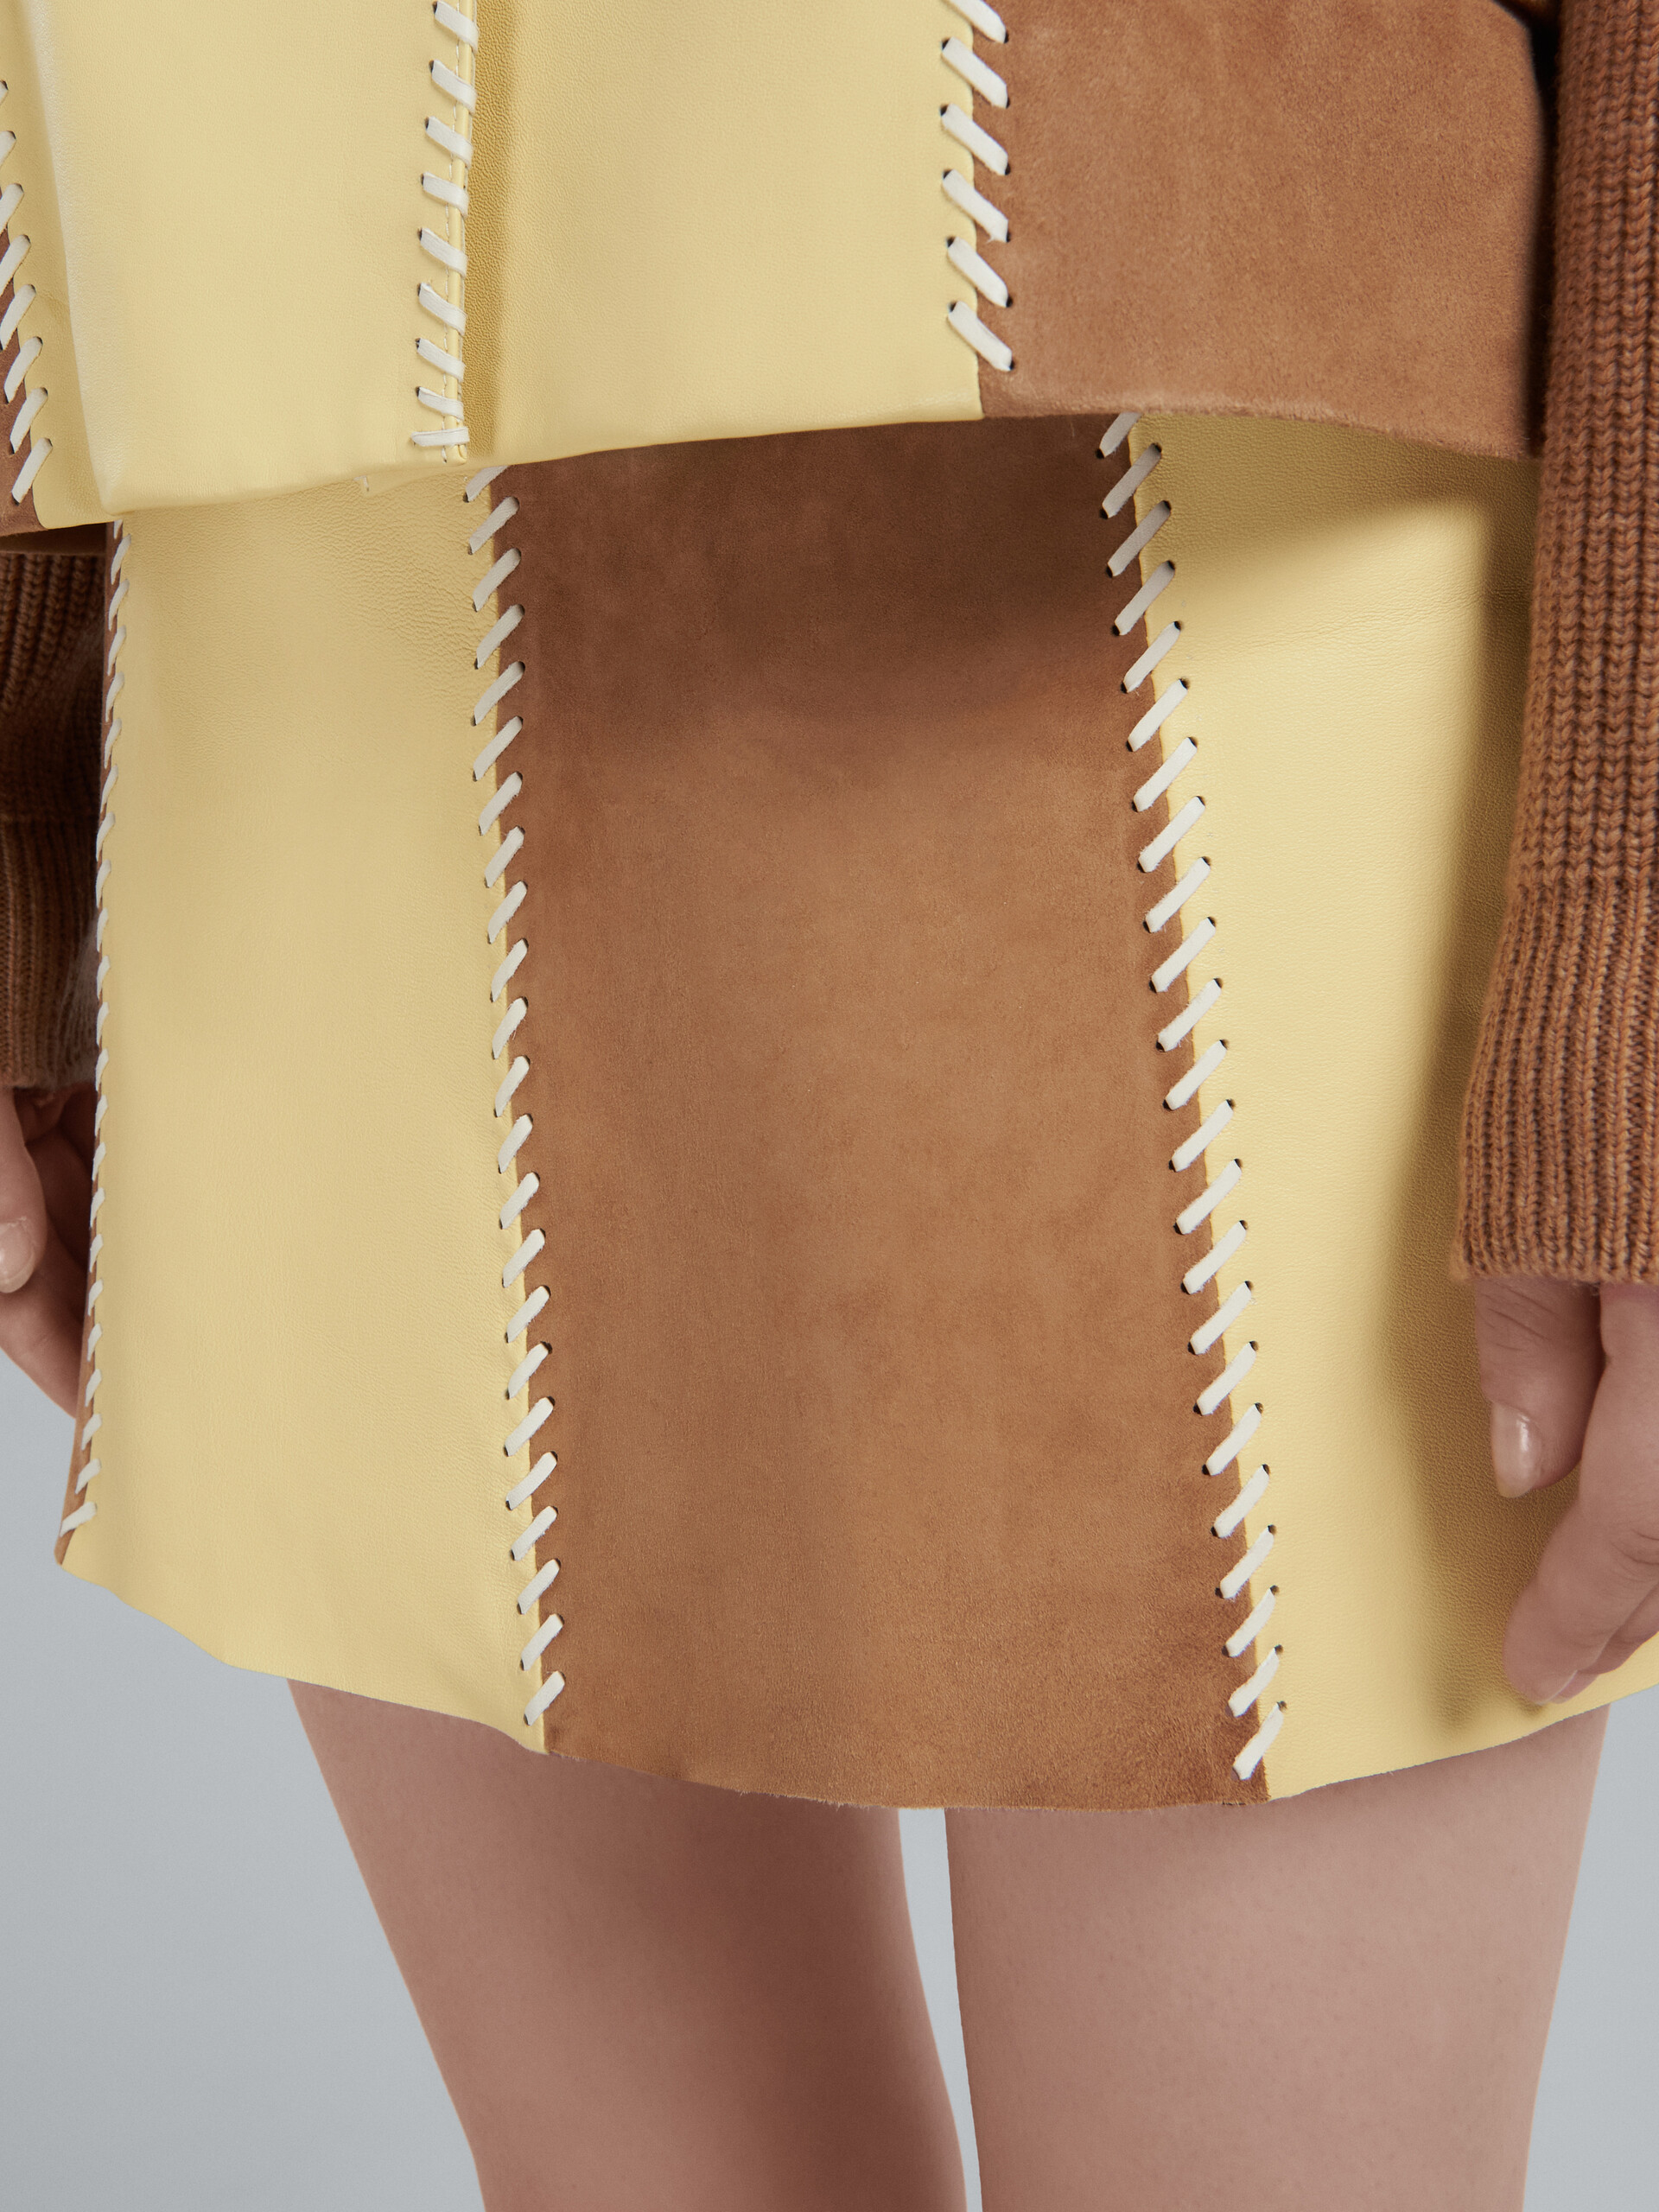 Brown nappa and suede skirt - Skirts - Image 4